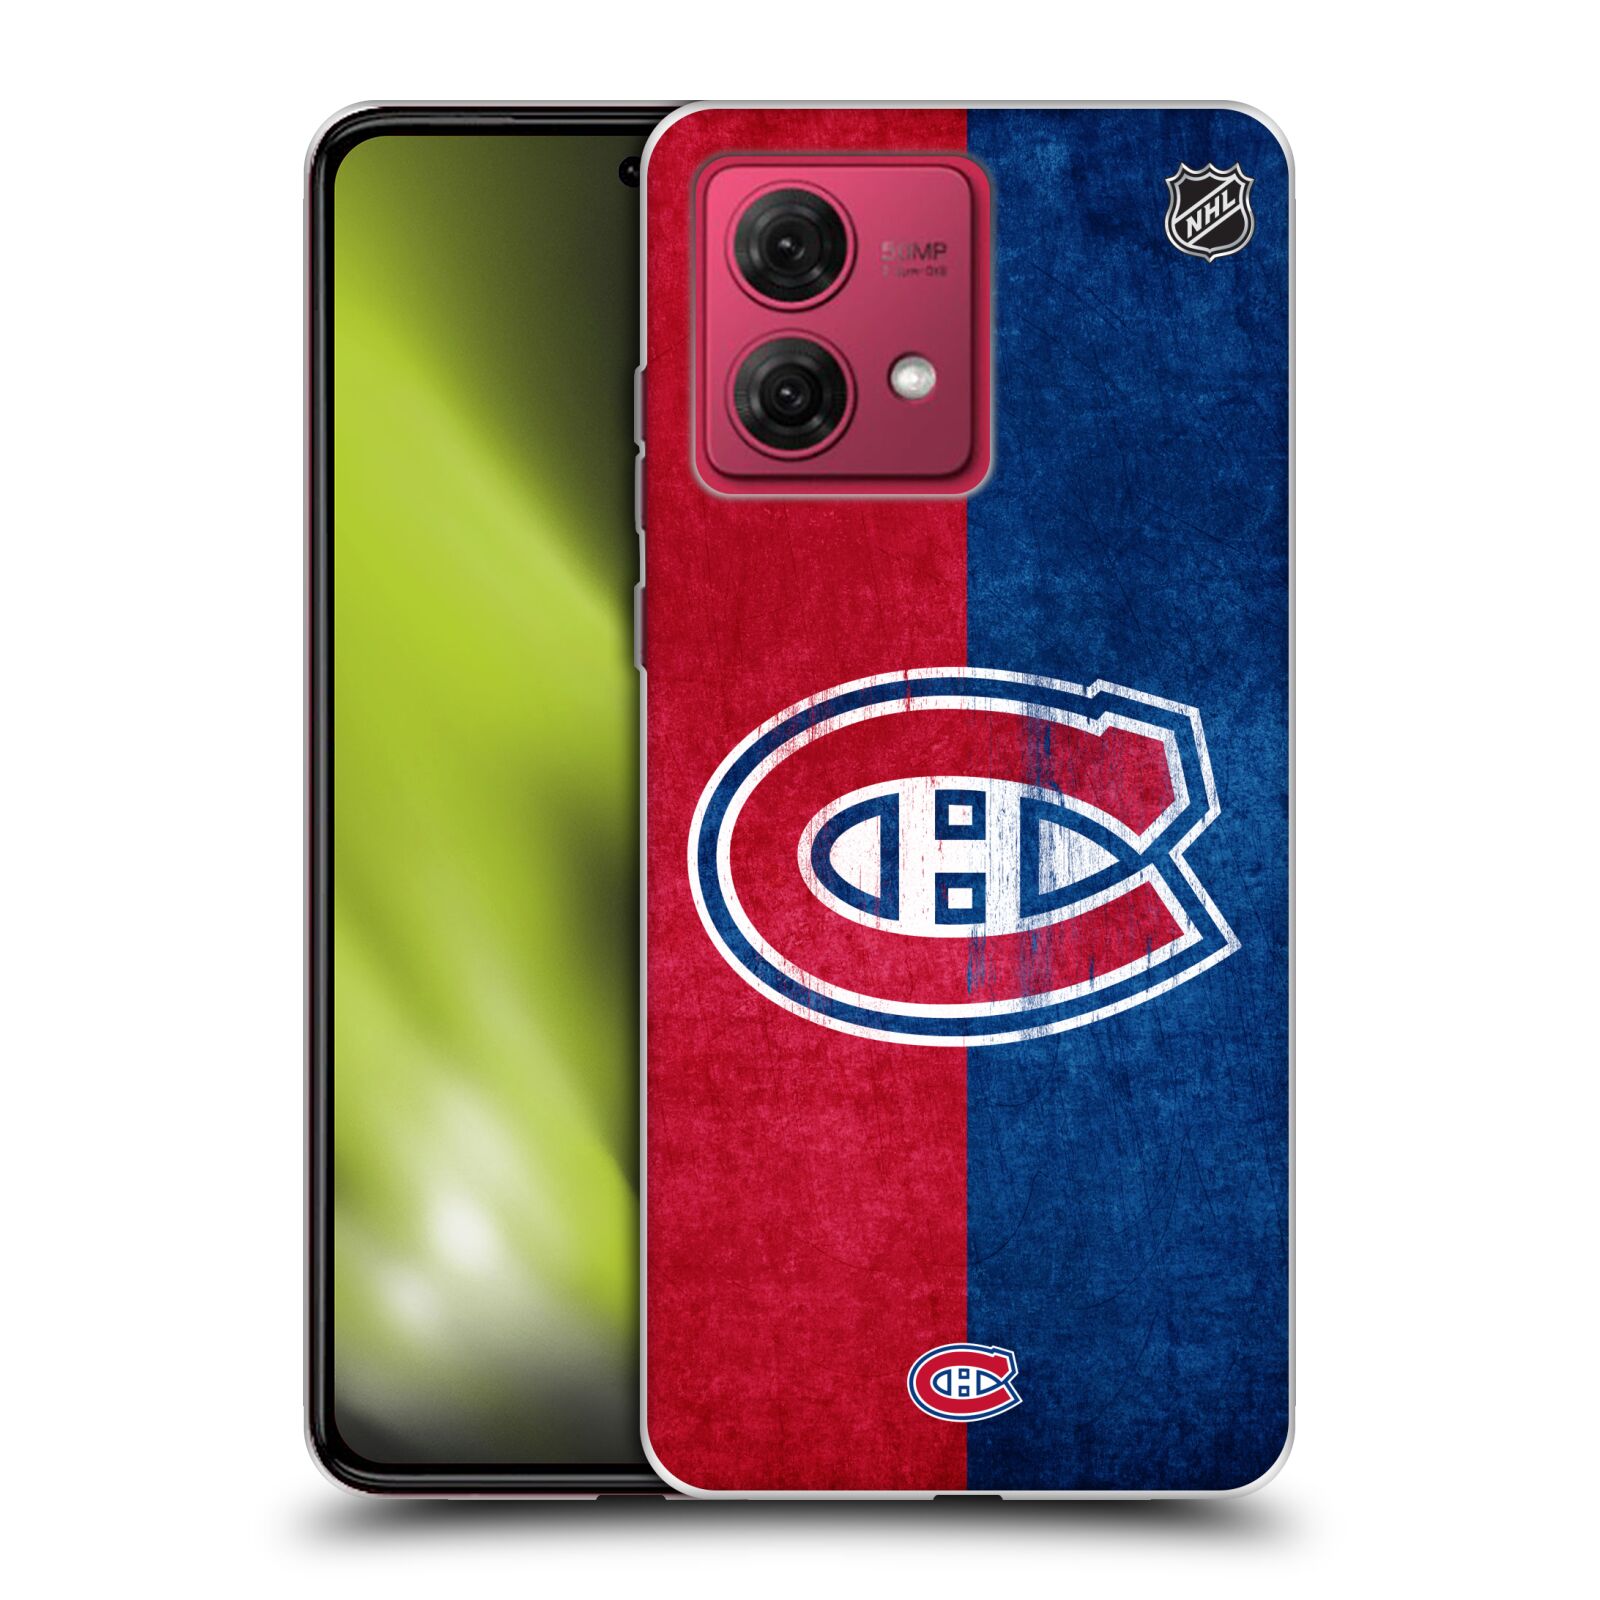 Silikonové pouzdro na mobil Motorola Moto G84 5G - NHL - Půlené logo Montreal Canadiens (Silikonový kryt, obal, pouzdro na mobilní telefon Motorola Moto G84 5G s licencovaným motivem NHL - Půlené logo Montreal Canadiens)